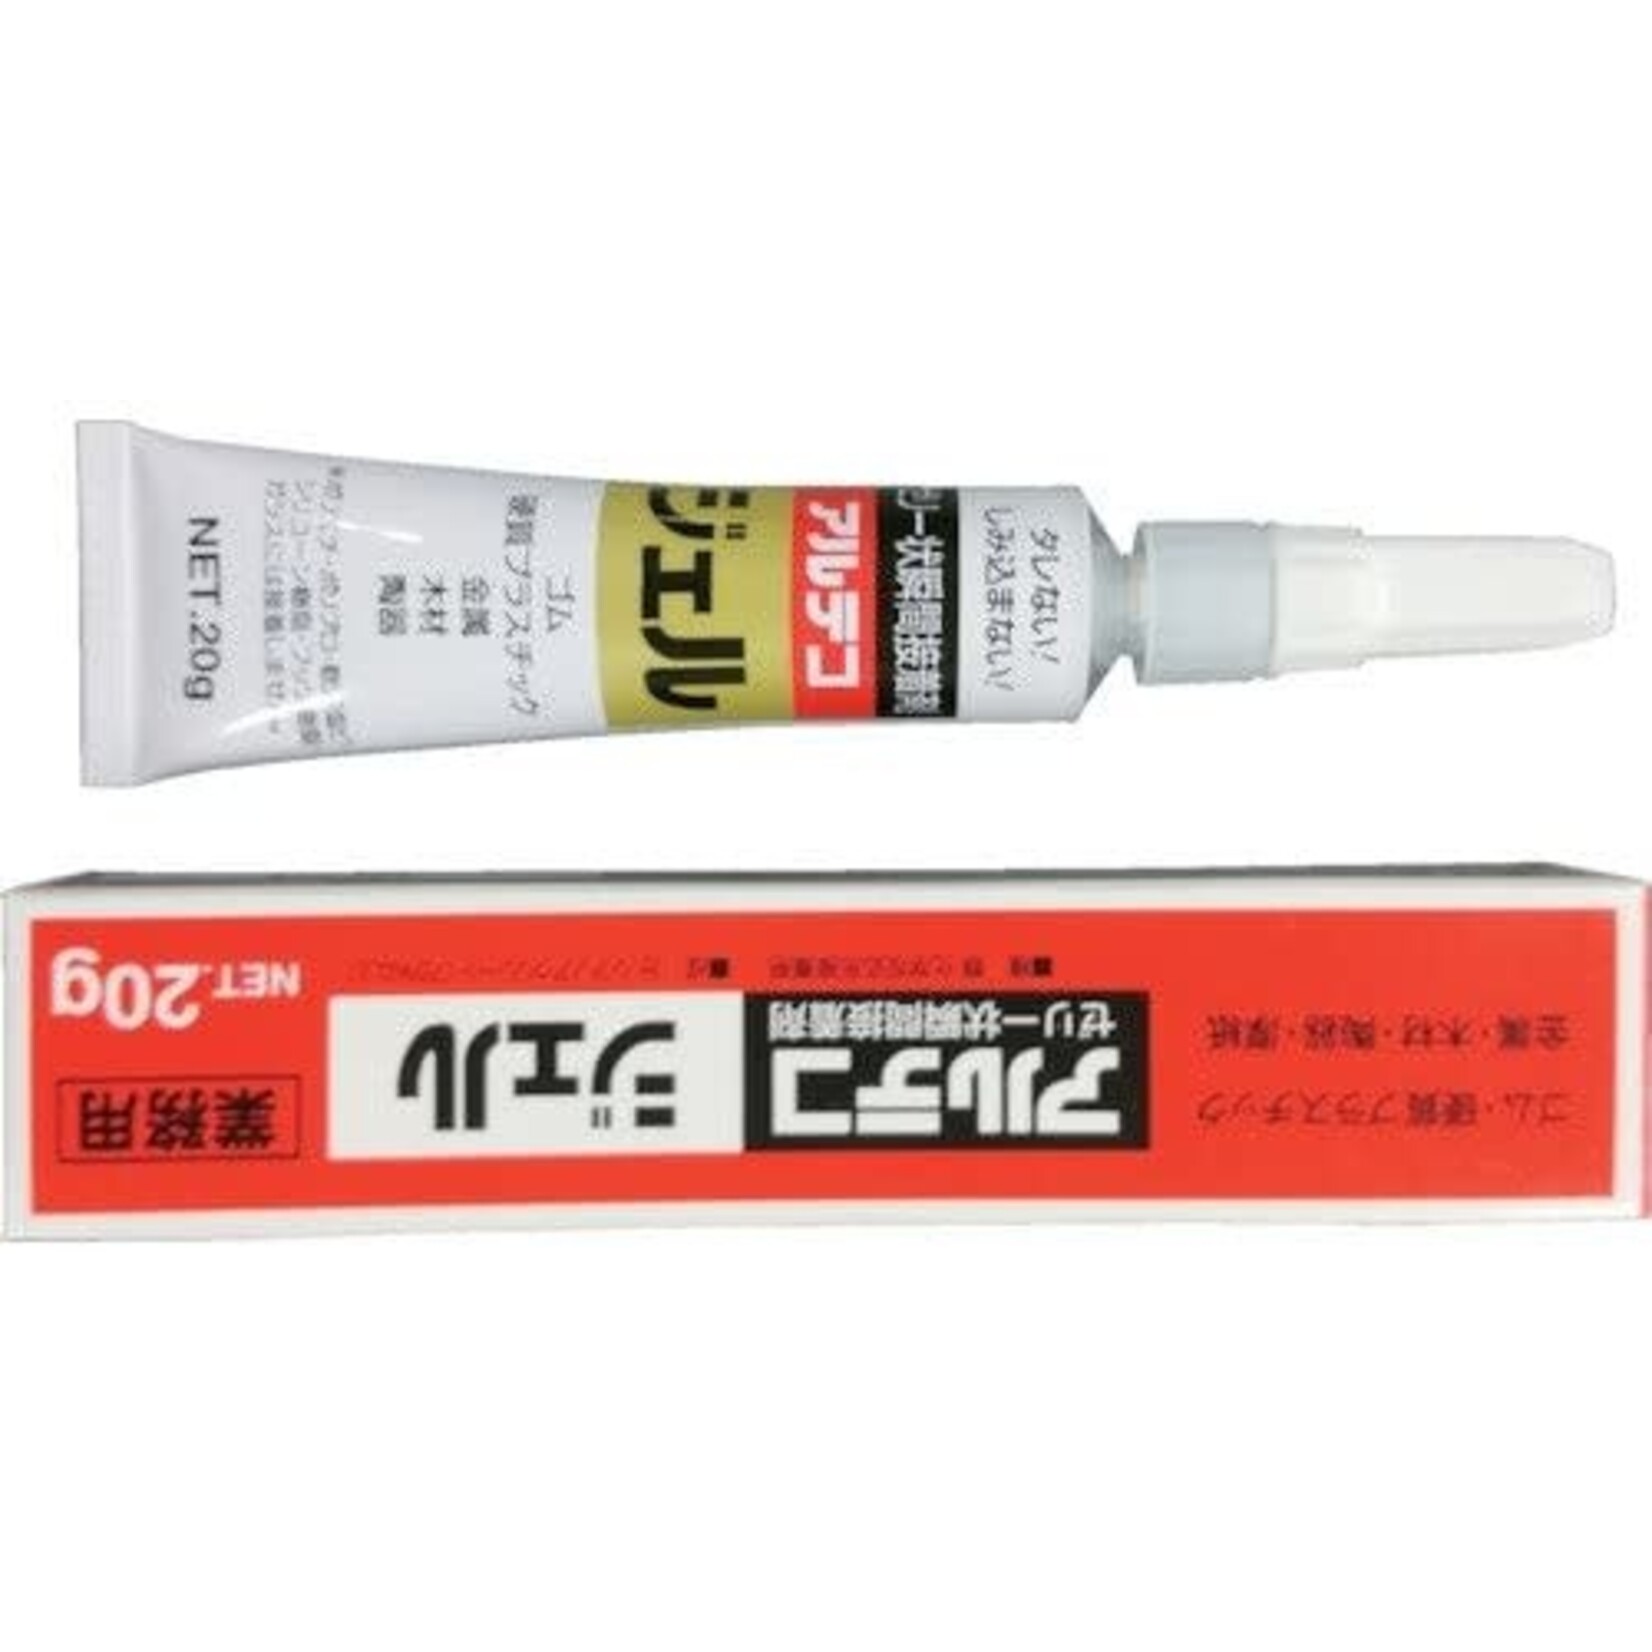 20 gram gel tube glue